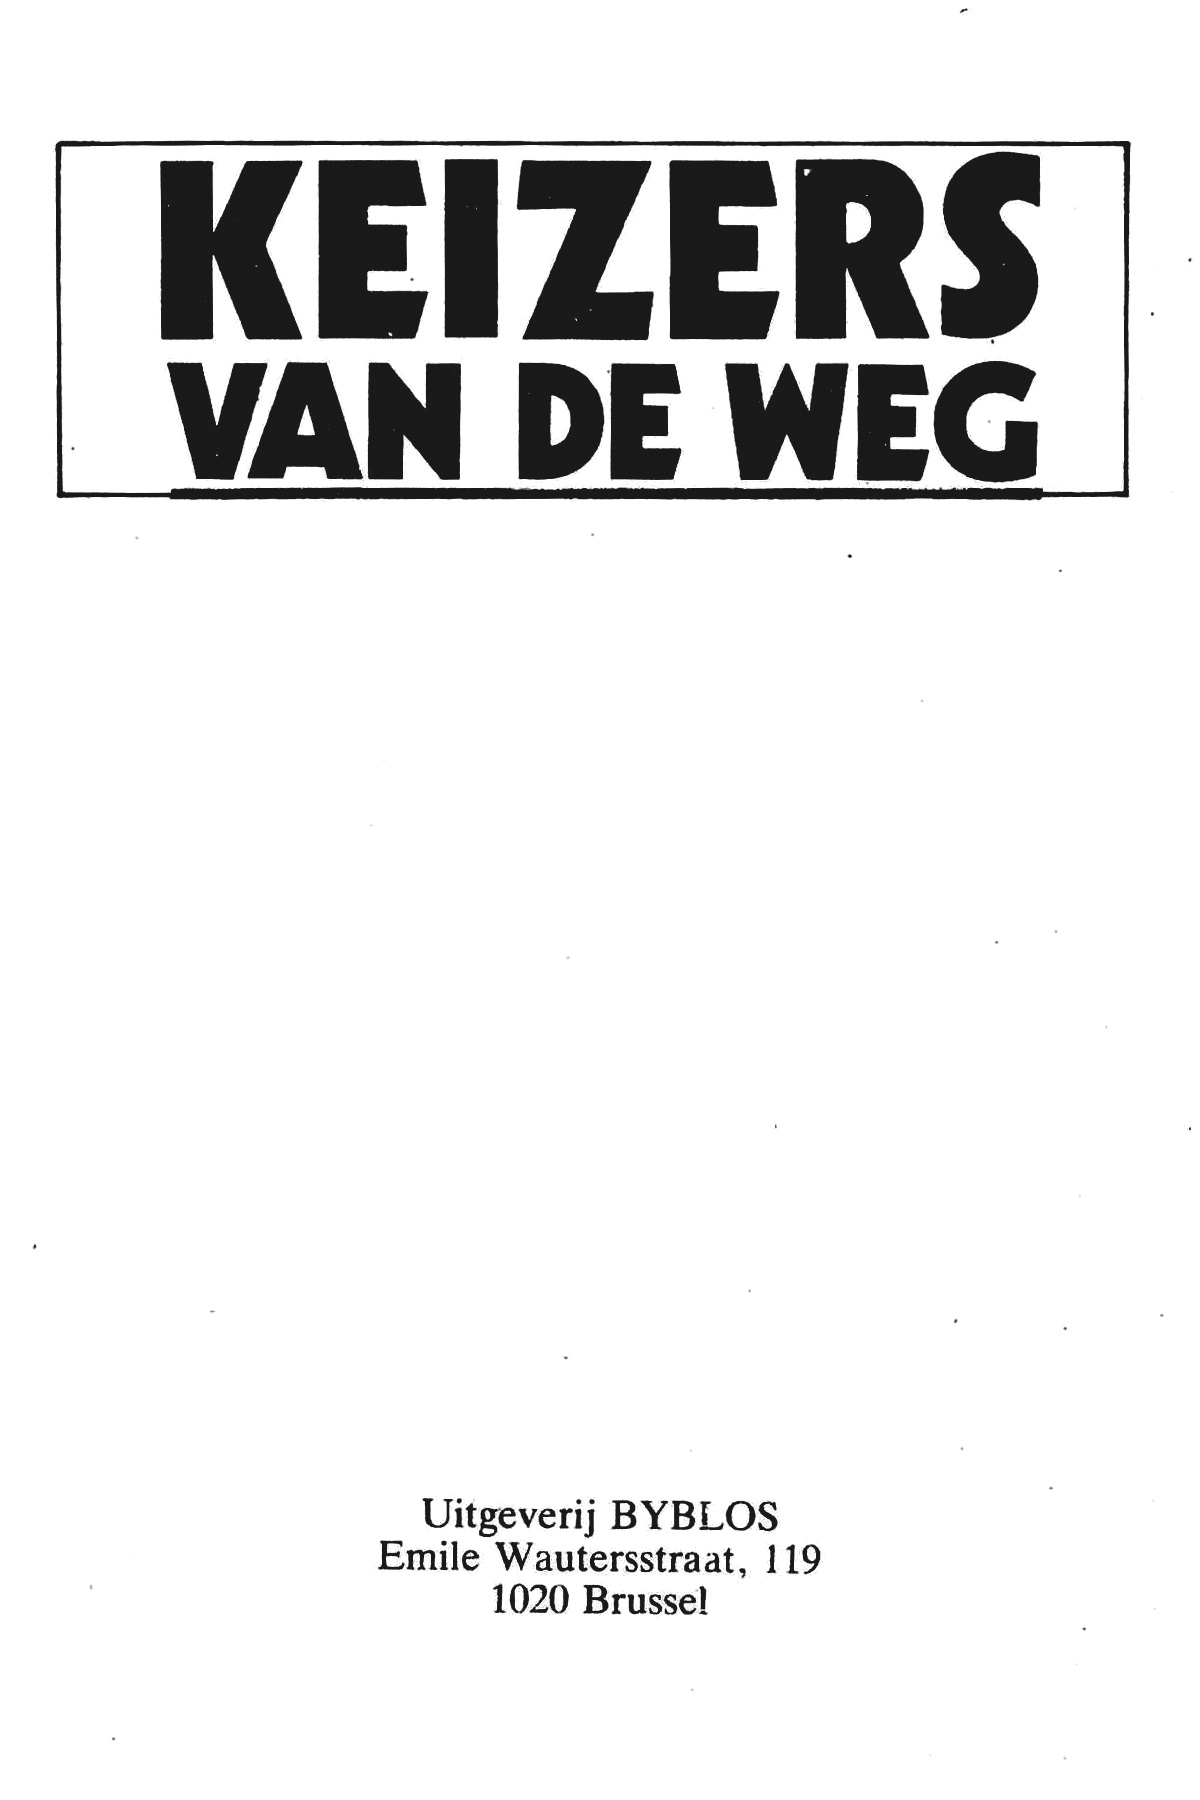 Keizers van de weg 1 - Mario Vergone (Dutch) 1